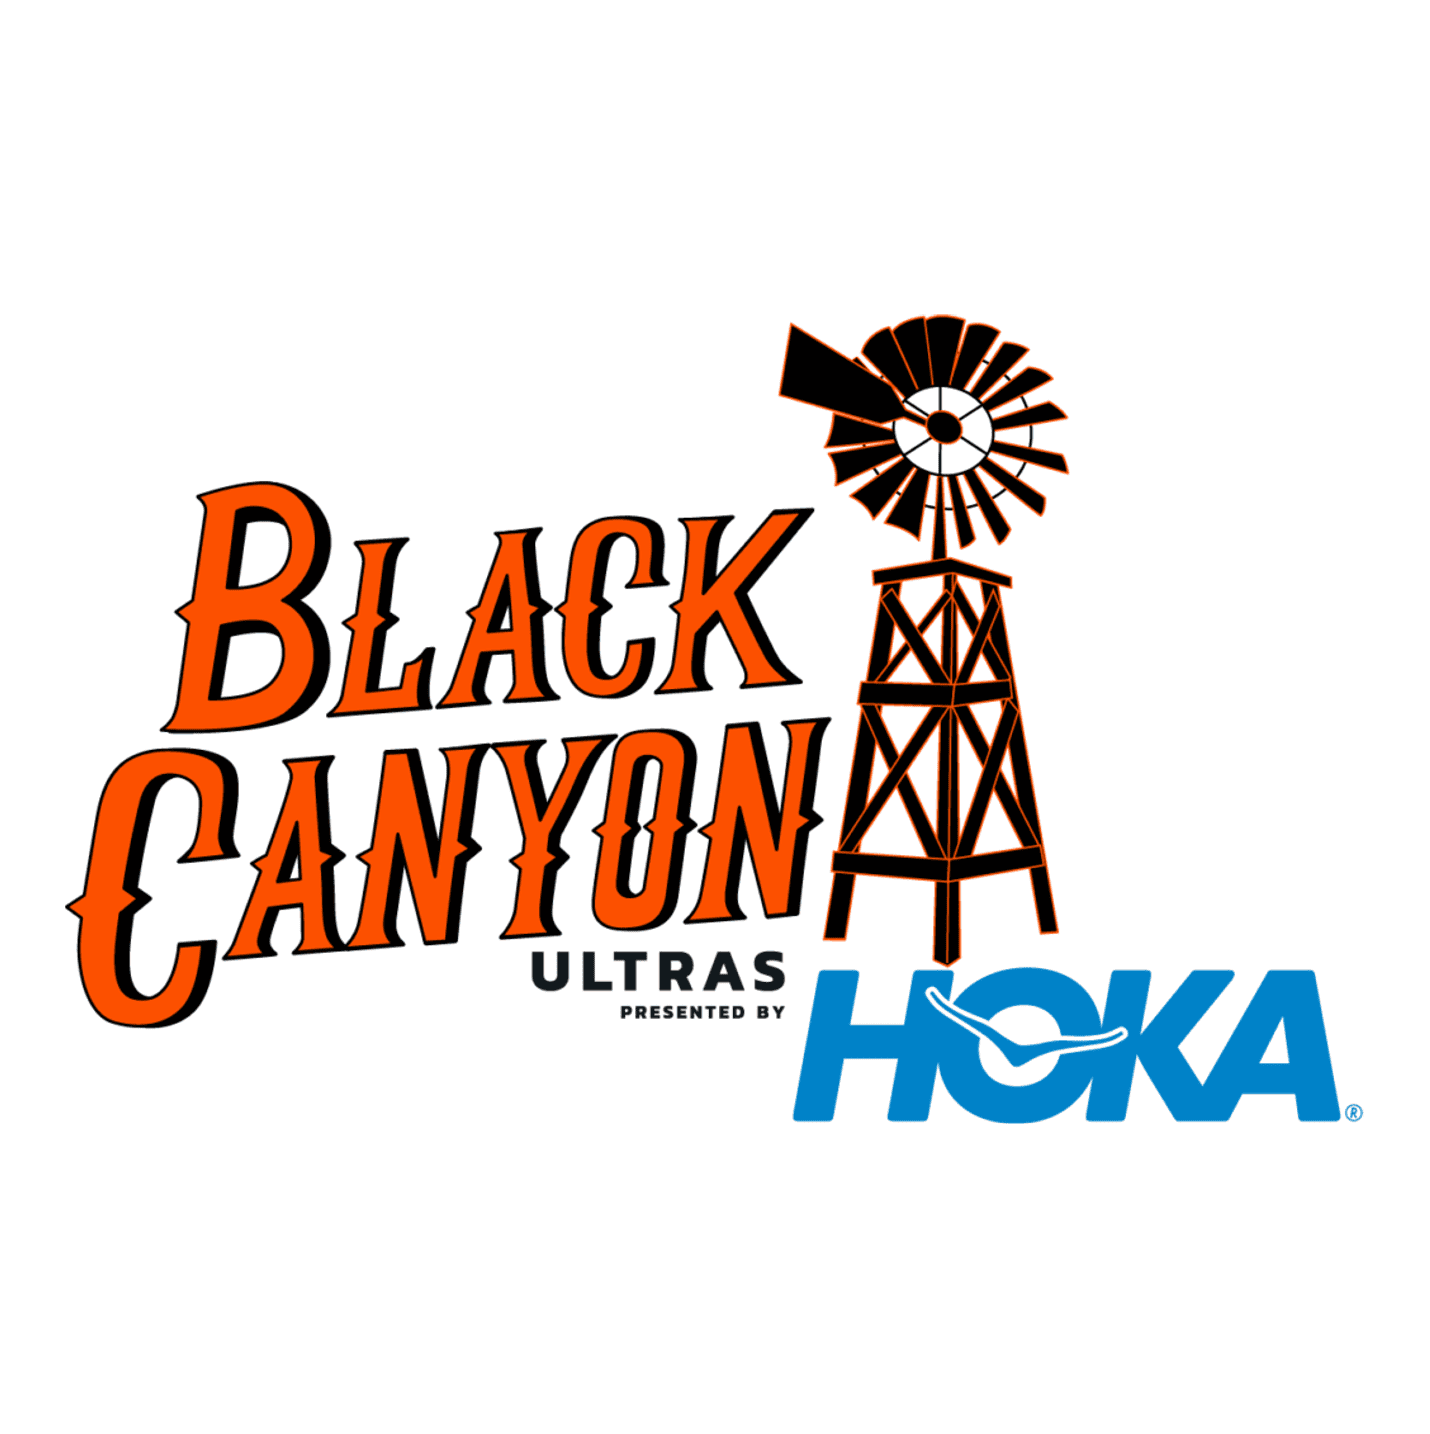 Logo Black Canyon Ultra Hoka